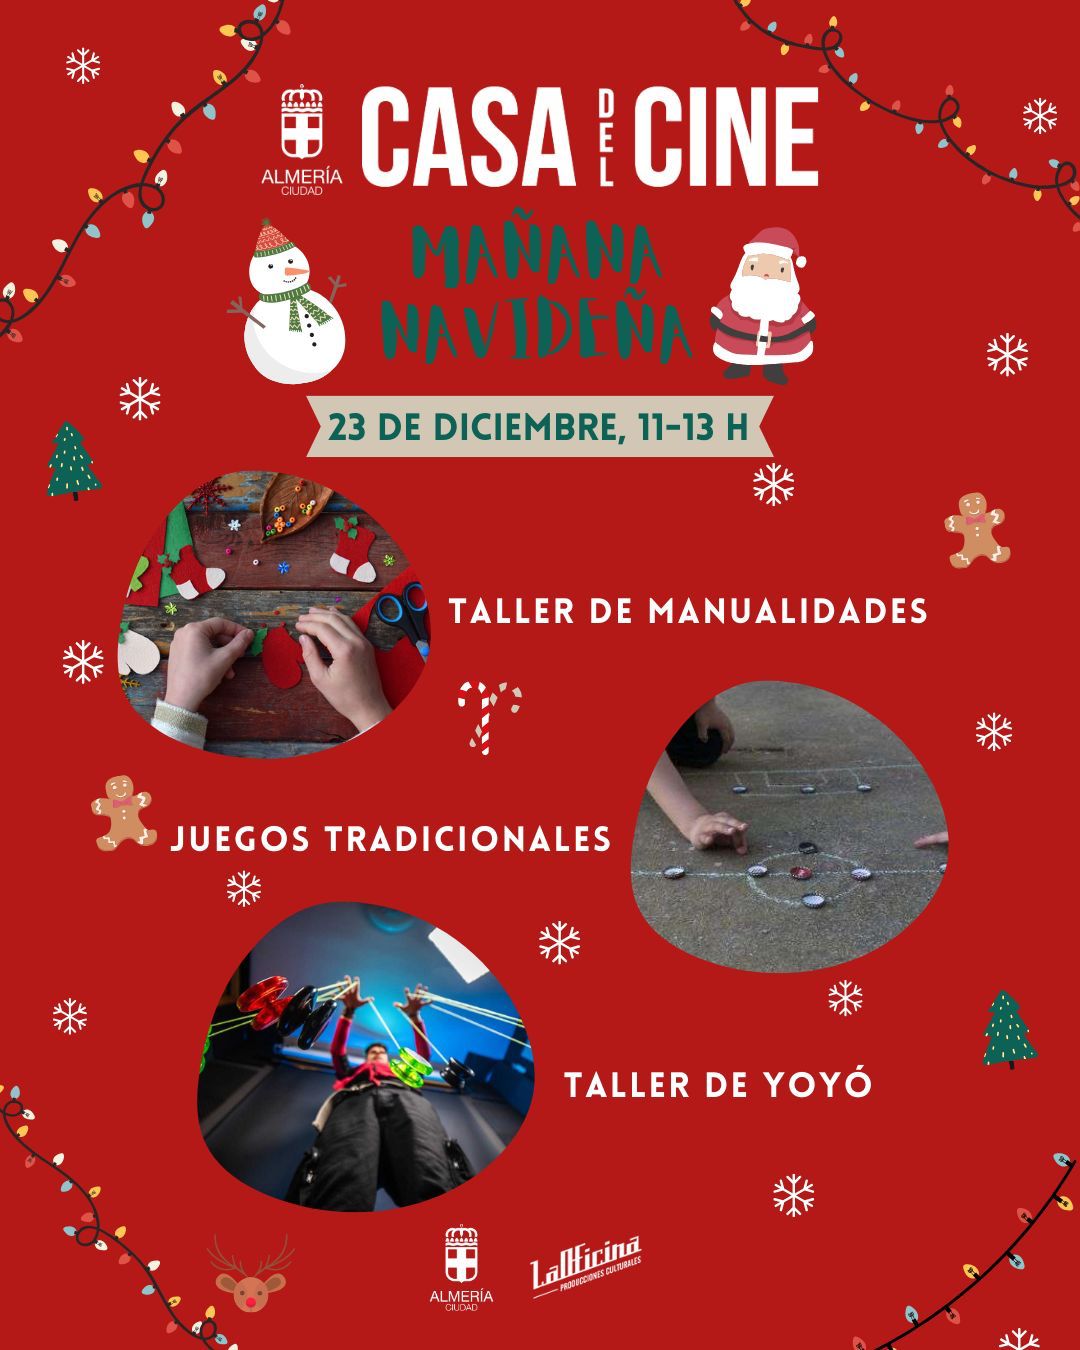 Mañana navideña - Casa del Cine